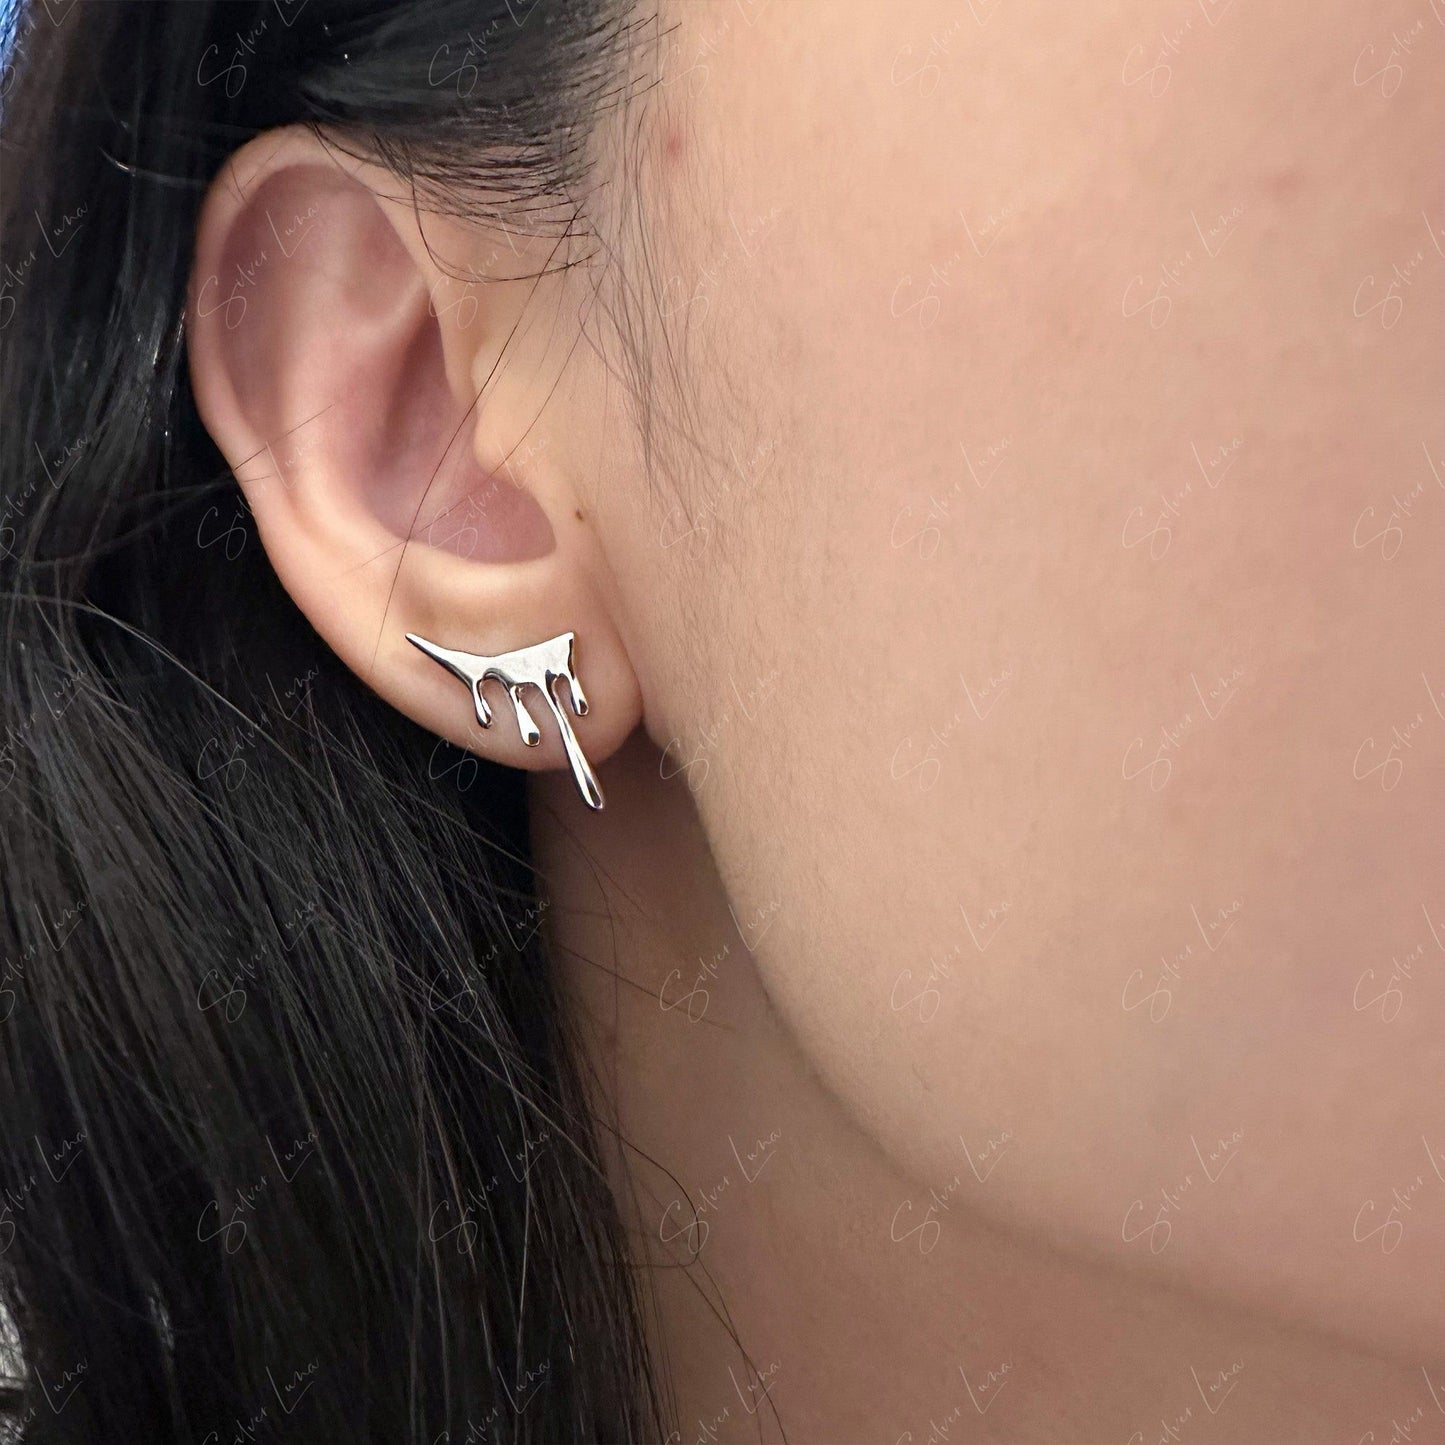 dripping stud earrings